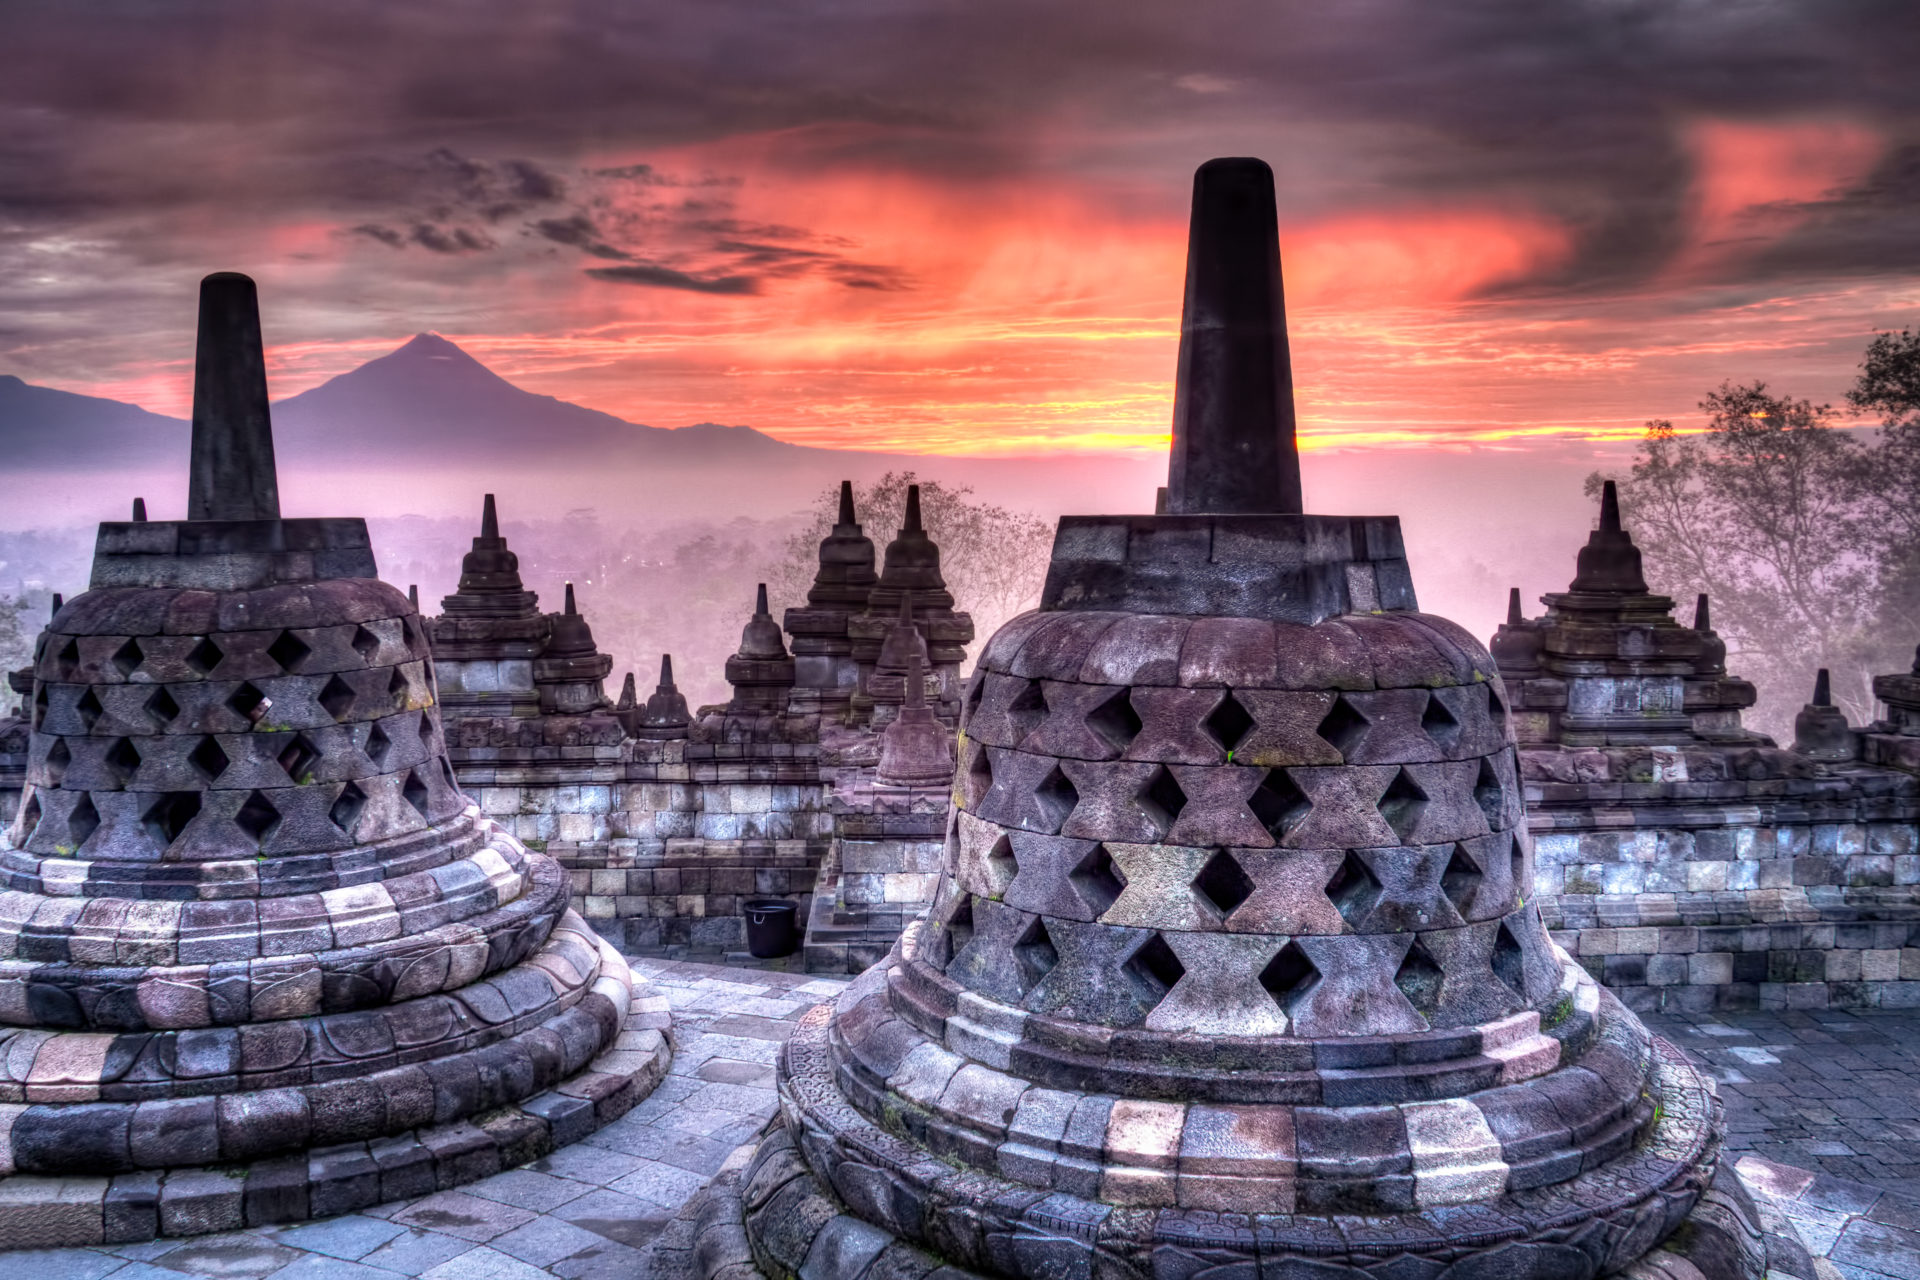 Indonesia Yogyakarta : 11 Breathtaking Photo Spots in Yogyakarta that